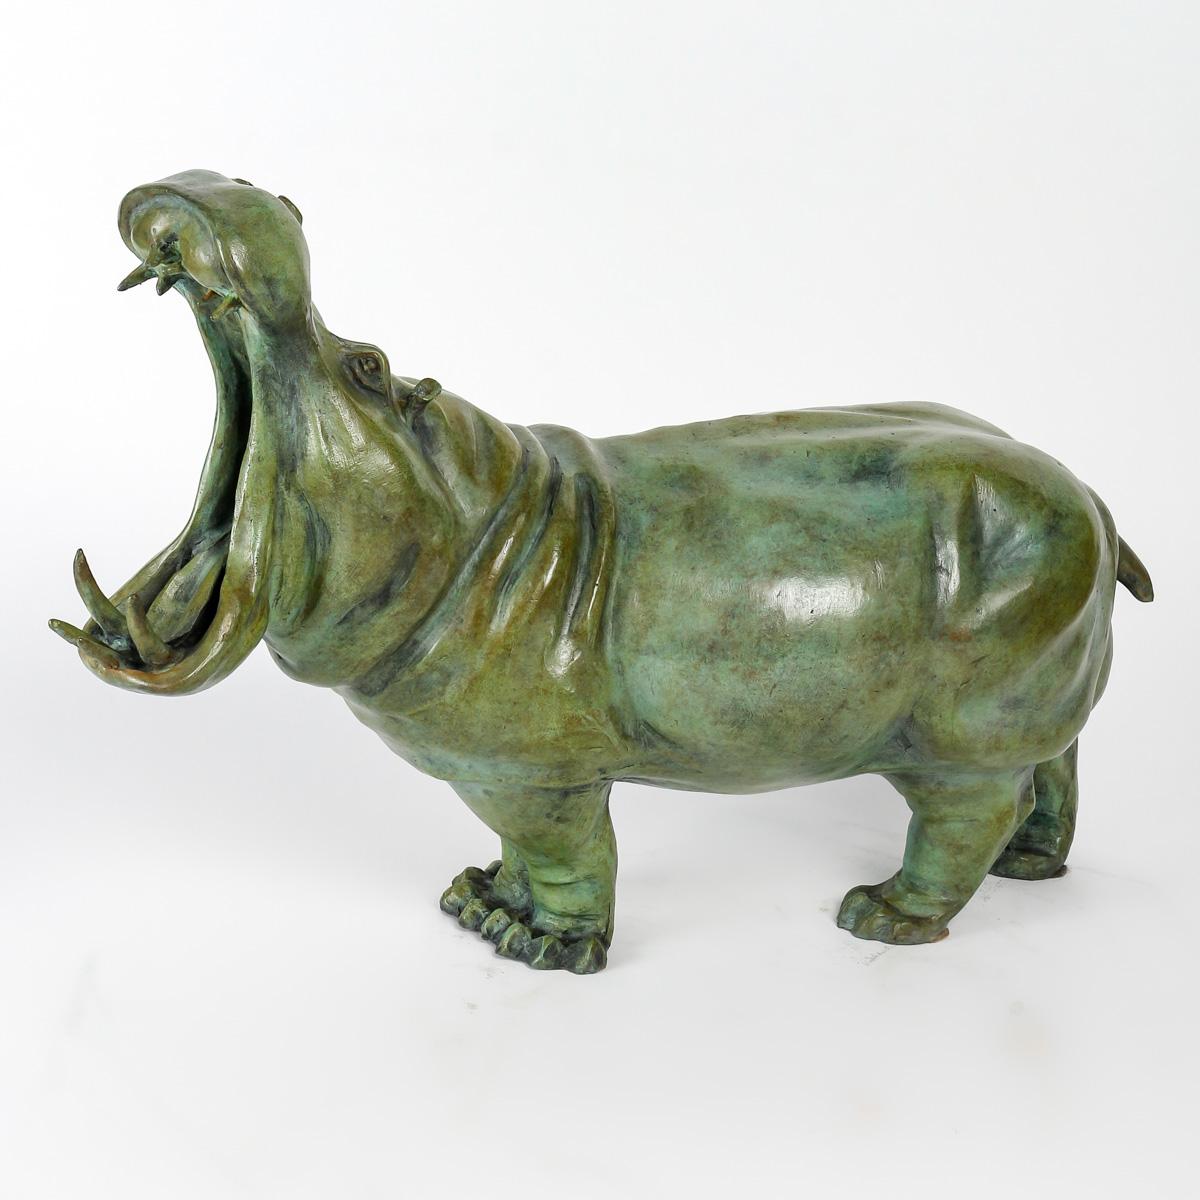 Bronze sculpture of a Hippopotamus by Artist Hadrien David.

Bronze, sculpture of a Hippopotamus in bronze with green patina by the artist Hadrien David, edition 3/4, artist proof, contemporary sculpture, XXIst century.
h: 38cm, l: 55cm, p: 23cm
